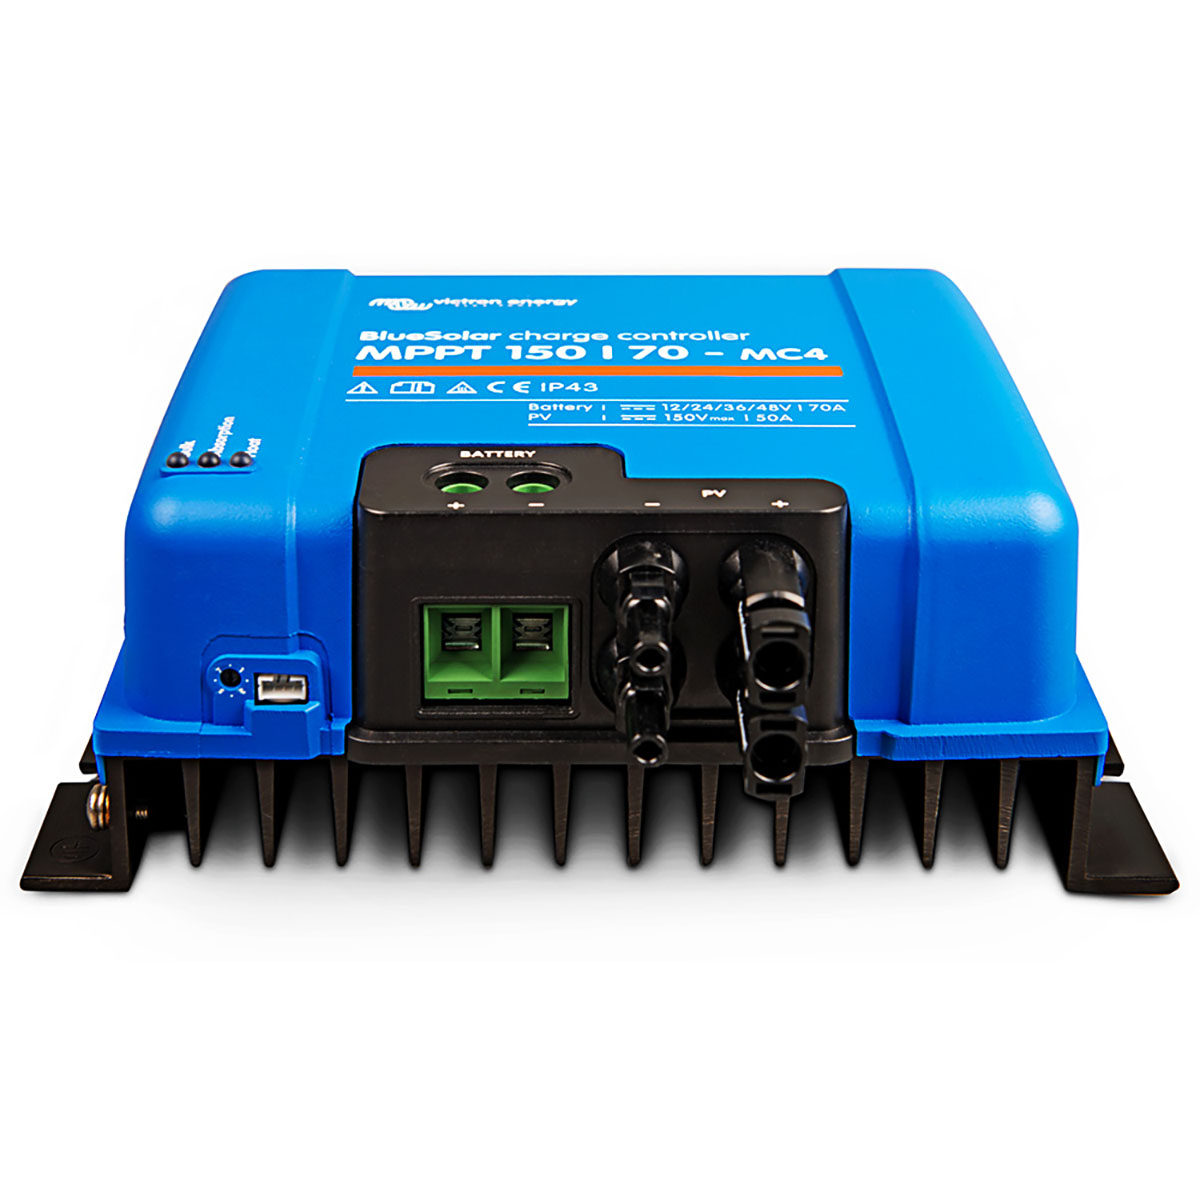 VICTRON ENERGY MPP-Tracker 48V Alle BlueSolar Batterien, 70A MPPT 150/70-MC4 24V Blau 12V